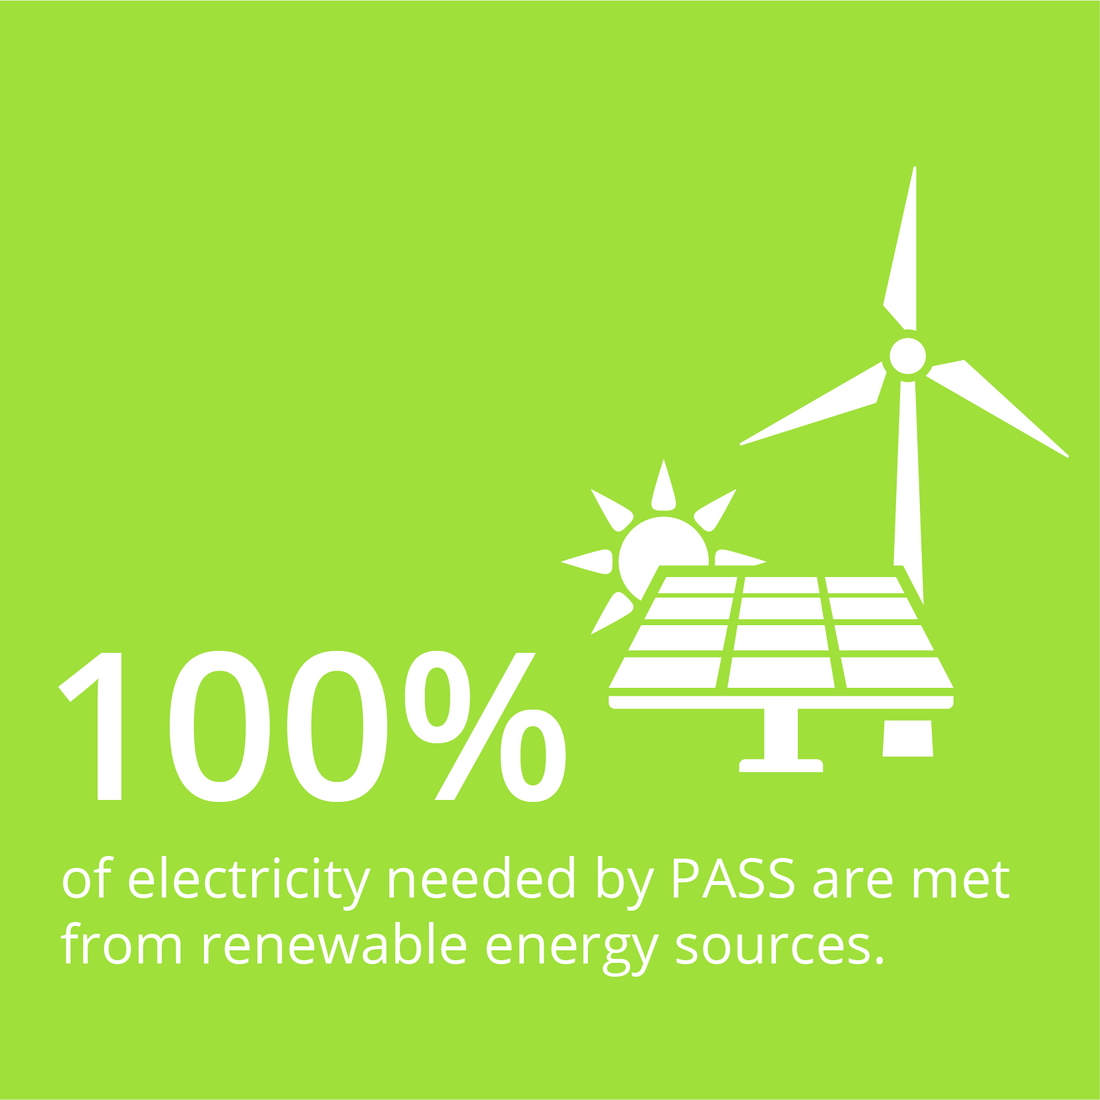 Sustainability: Renewable energies